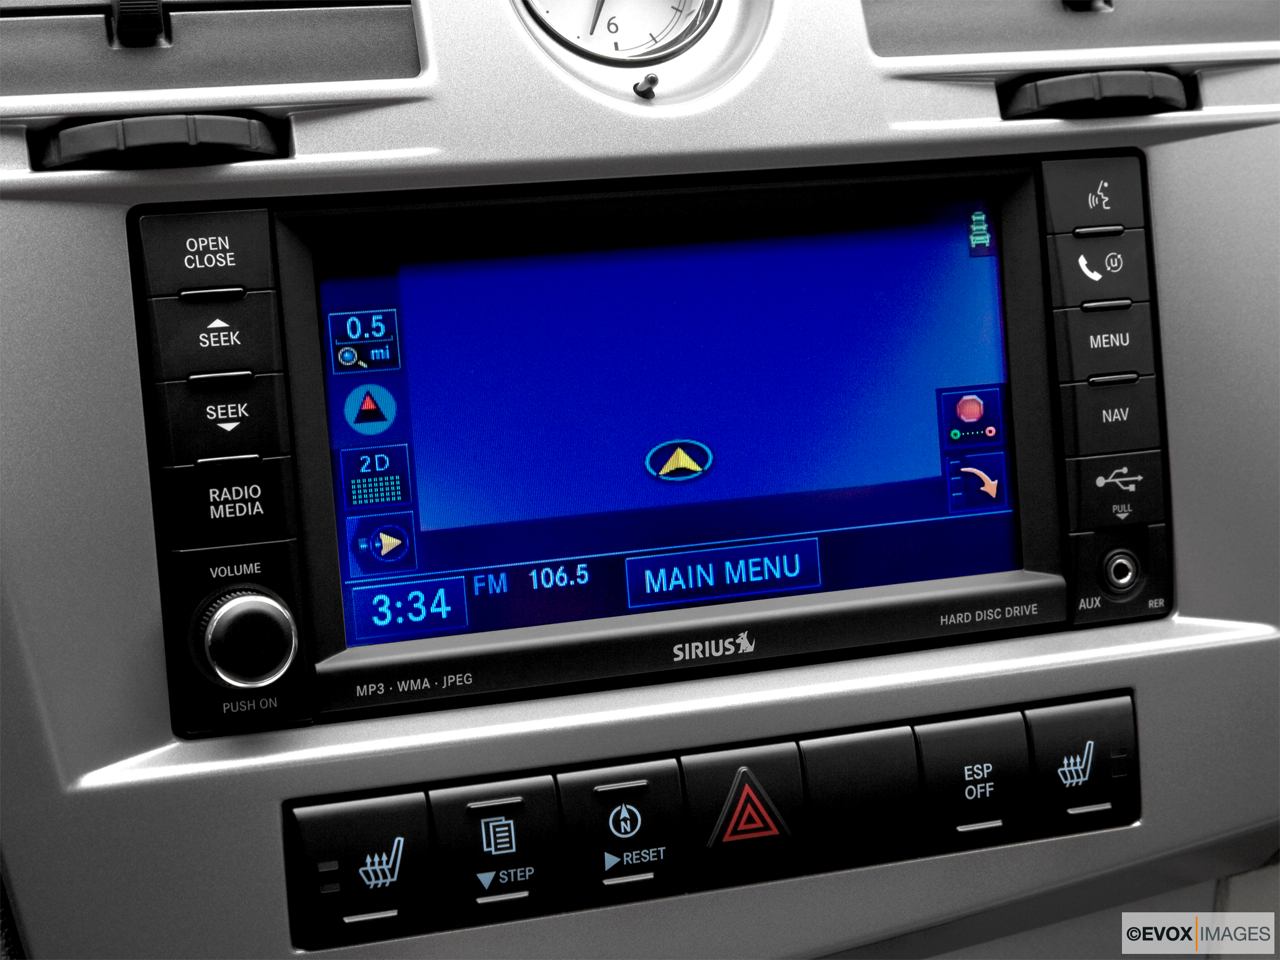 2010 Chrysler Sebring Touring Driver position view of navigation system. 